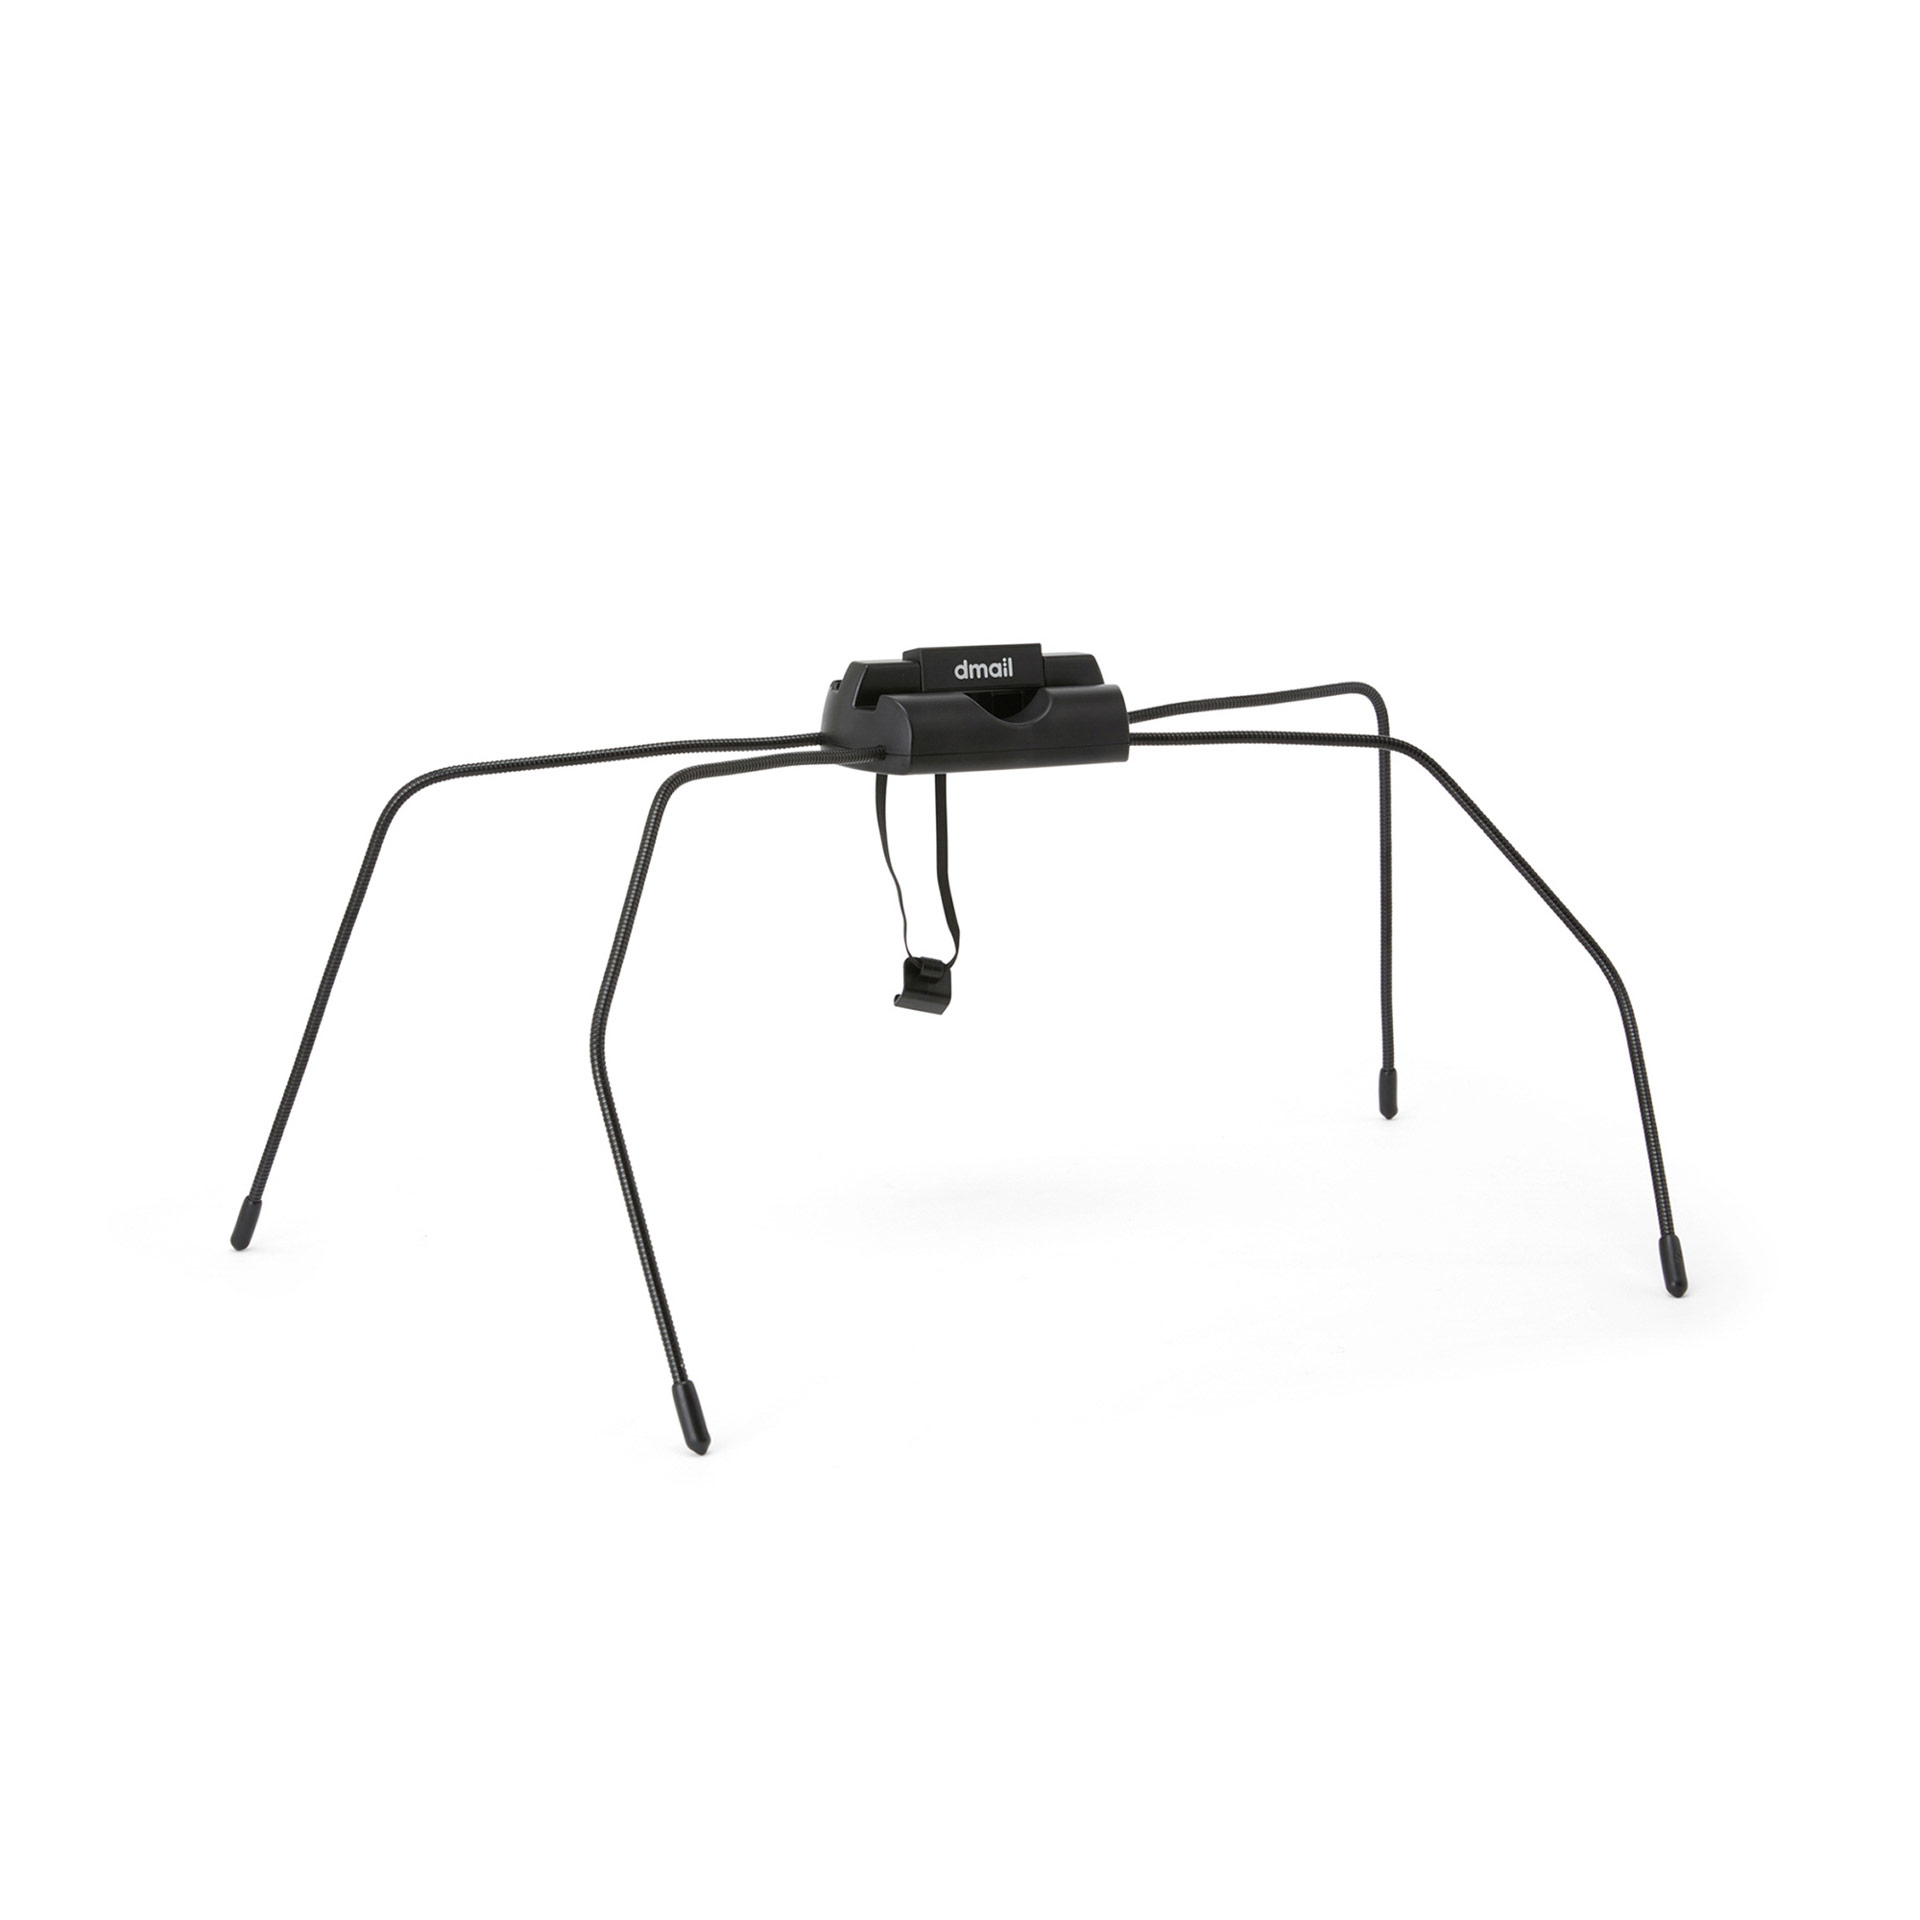 Supporto Per Device Spider Stand, , large